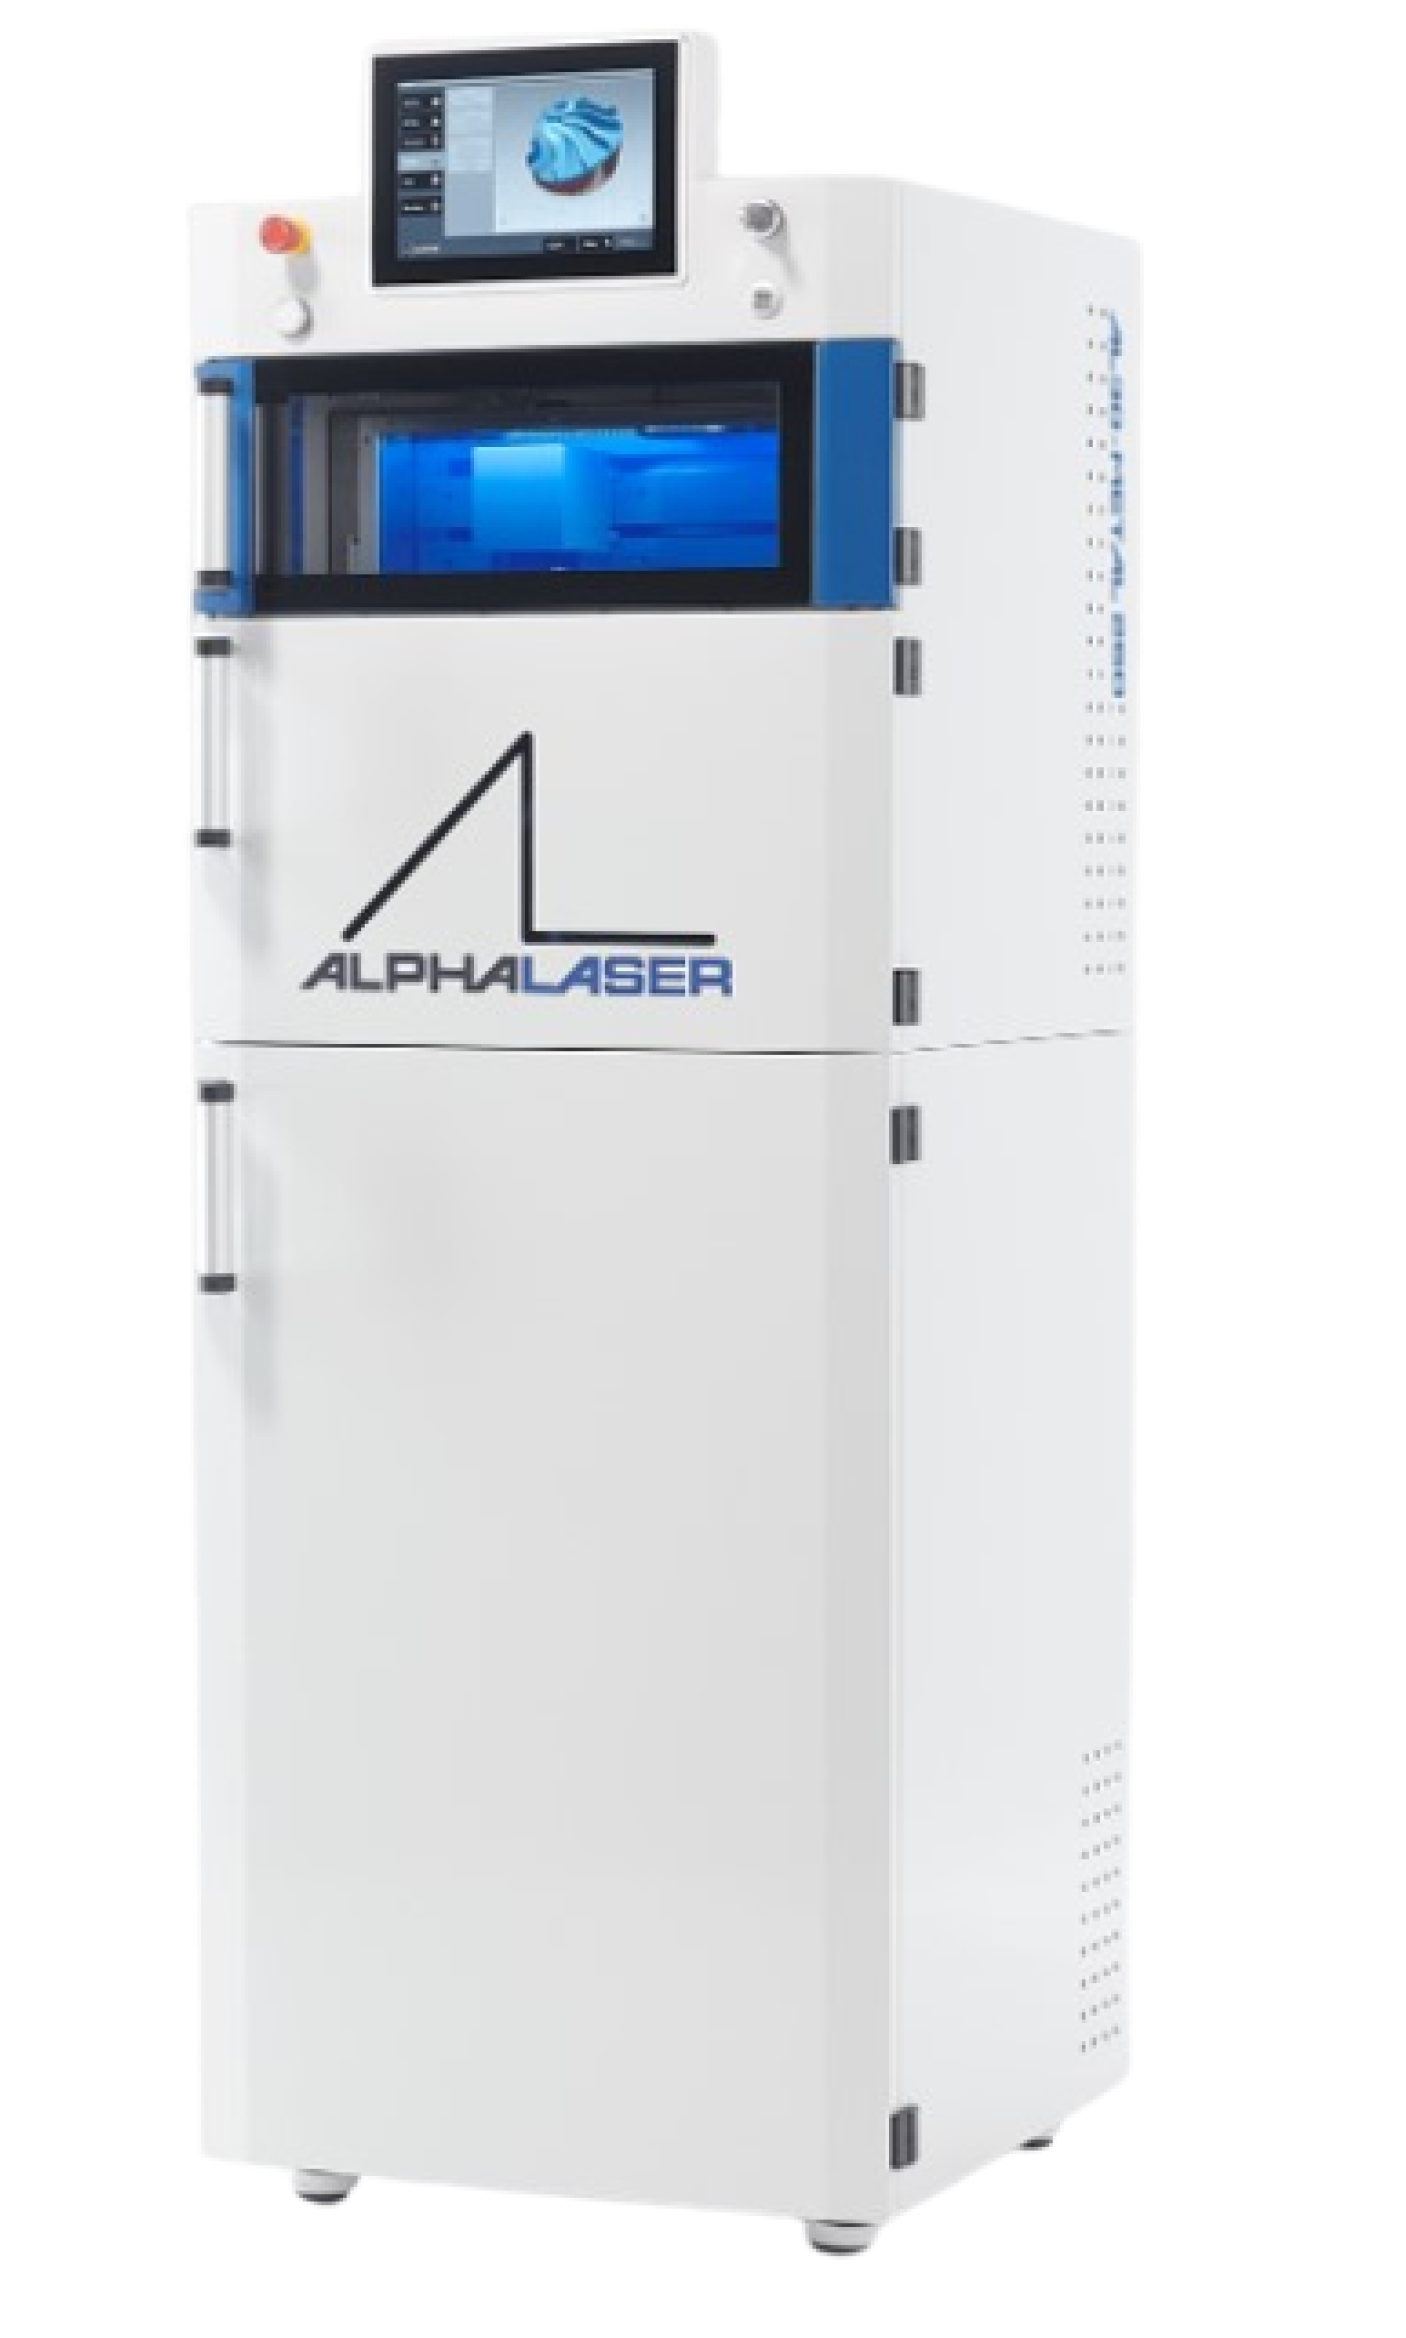 AL-3D Print Laser Printer Machine